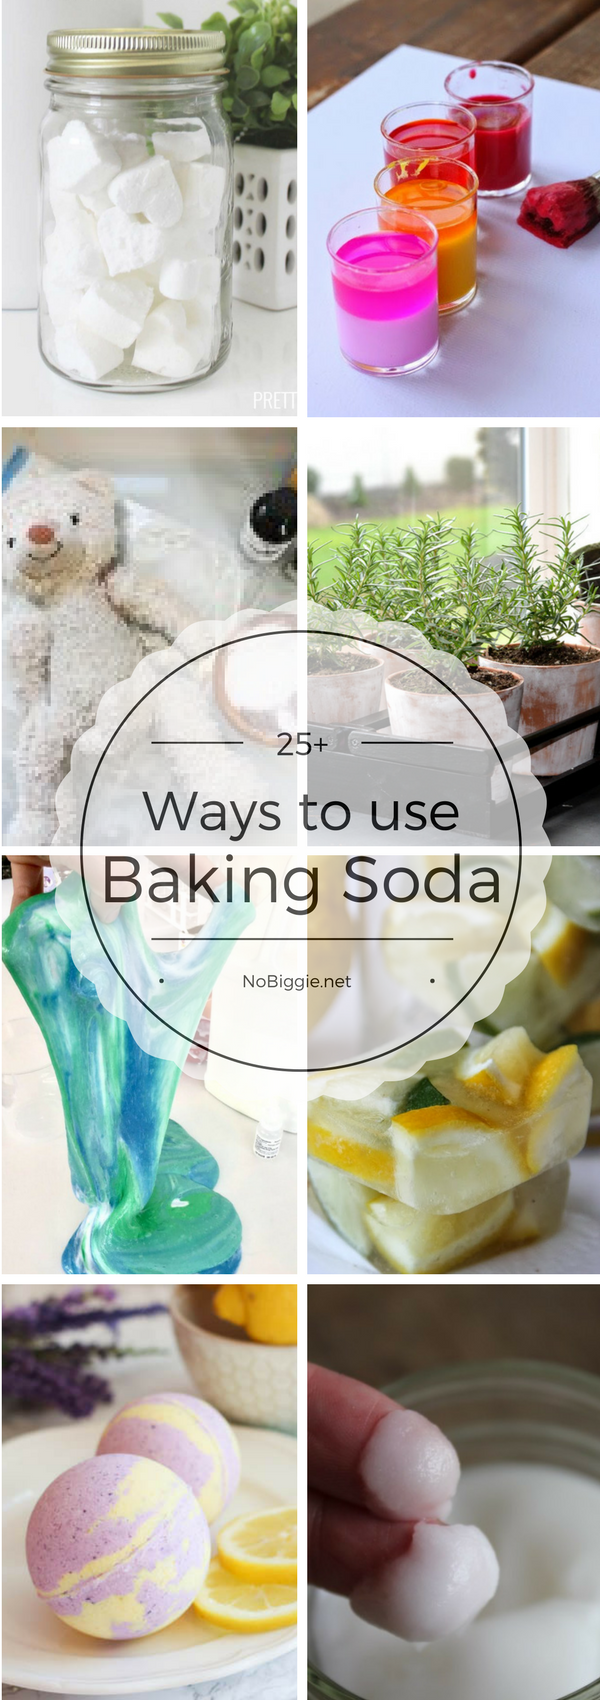 25+ Ways To Use Baking Soda | NoBiggie.net